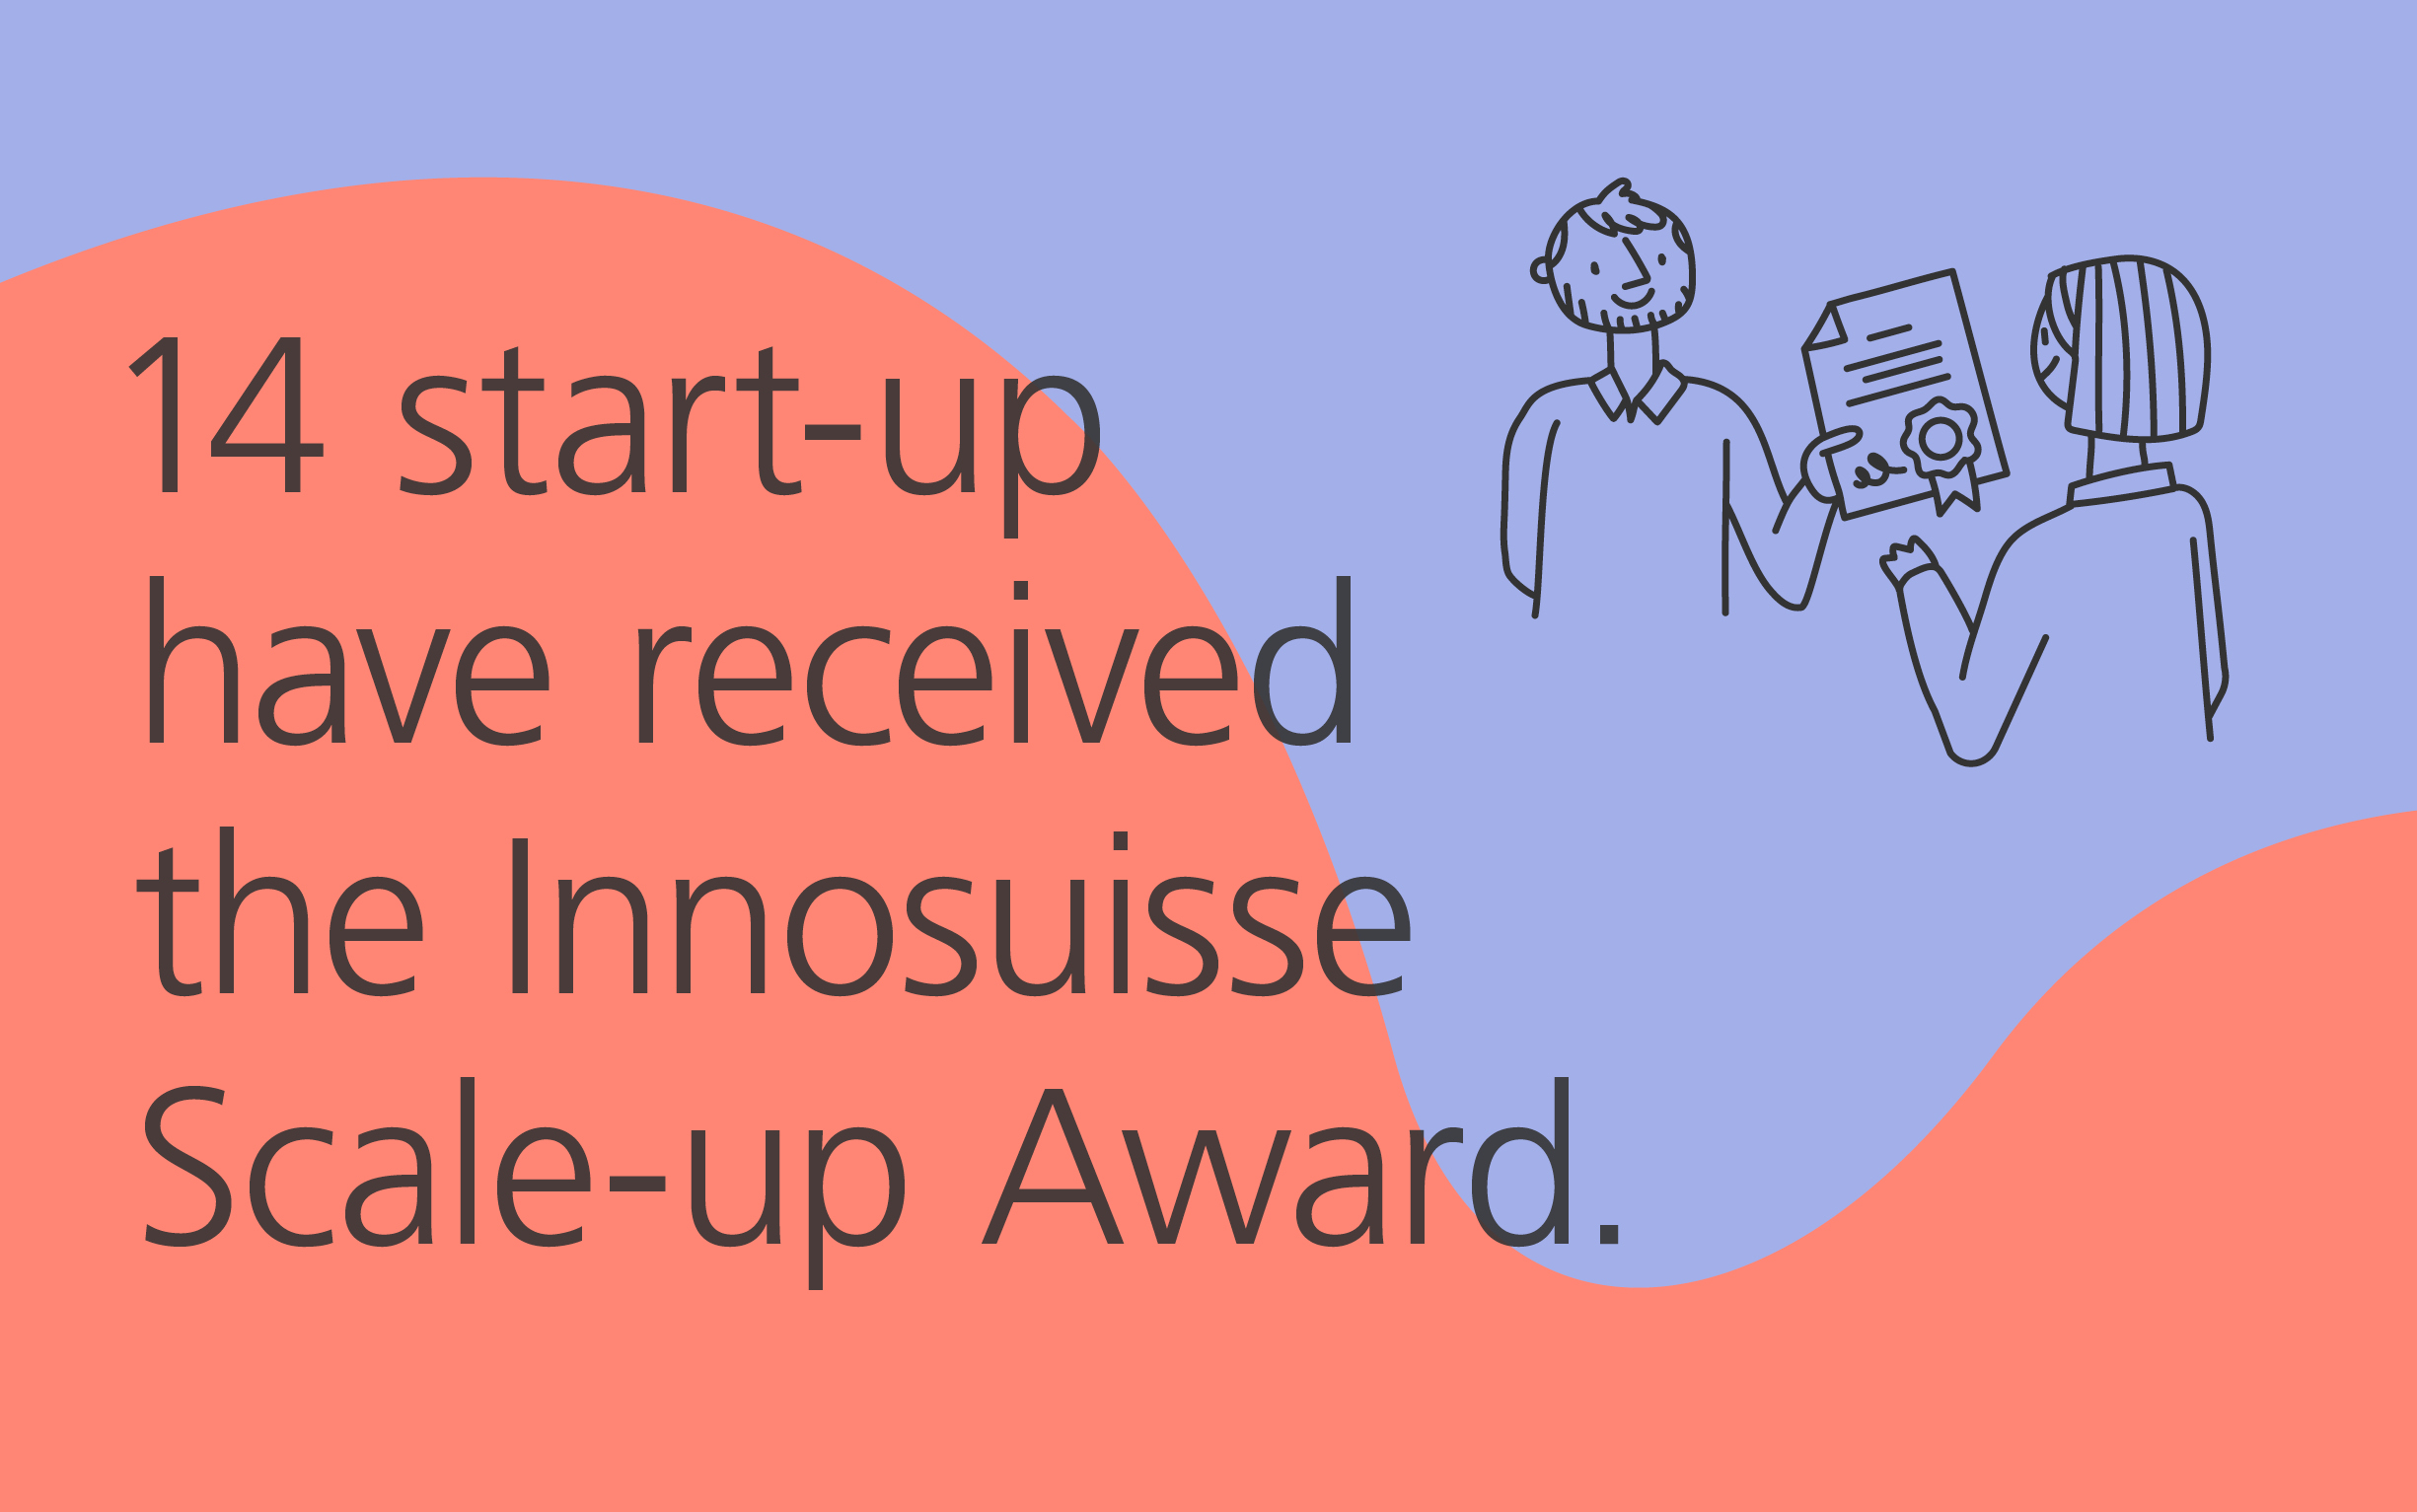 innosuisse-scaleup-award-web_EN